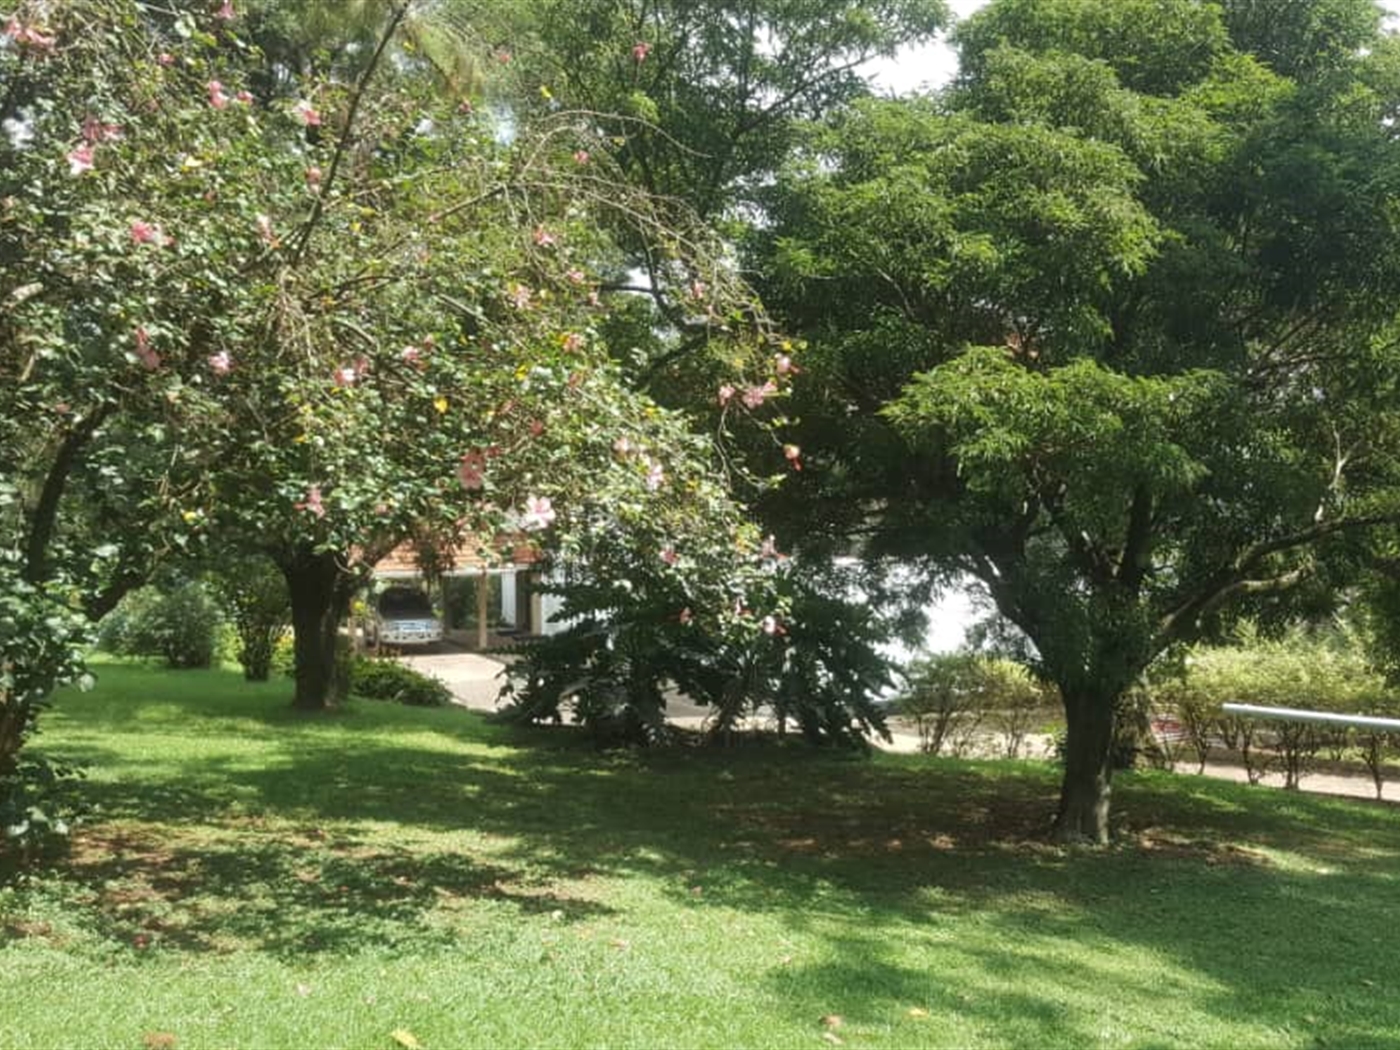 Mansion for rent in Nakasero Kampala